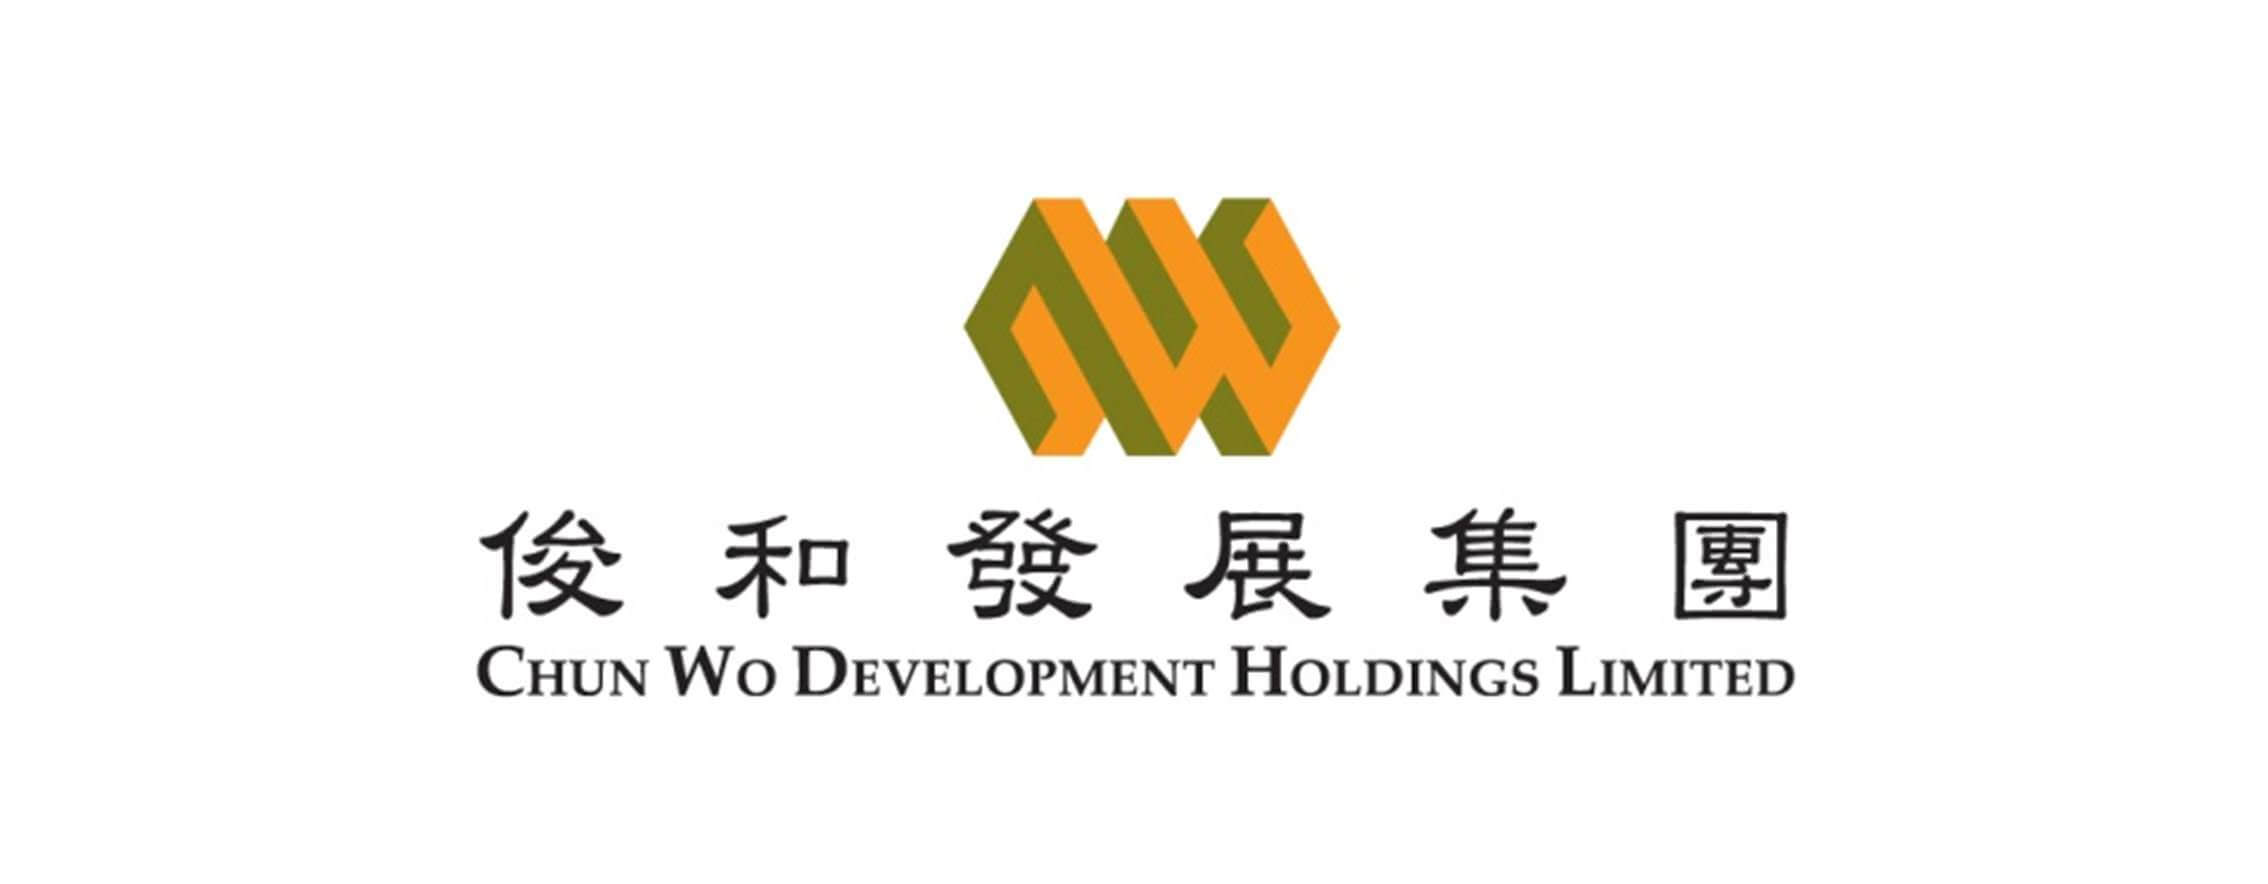 Chun Wo Development Holdings Limited